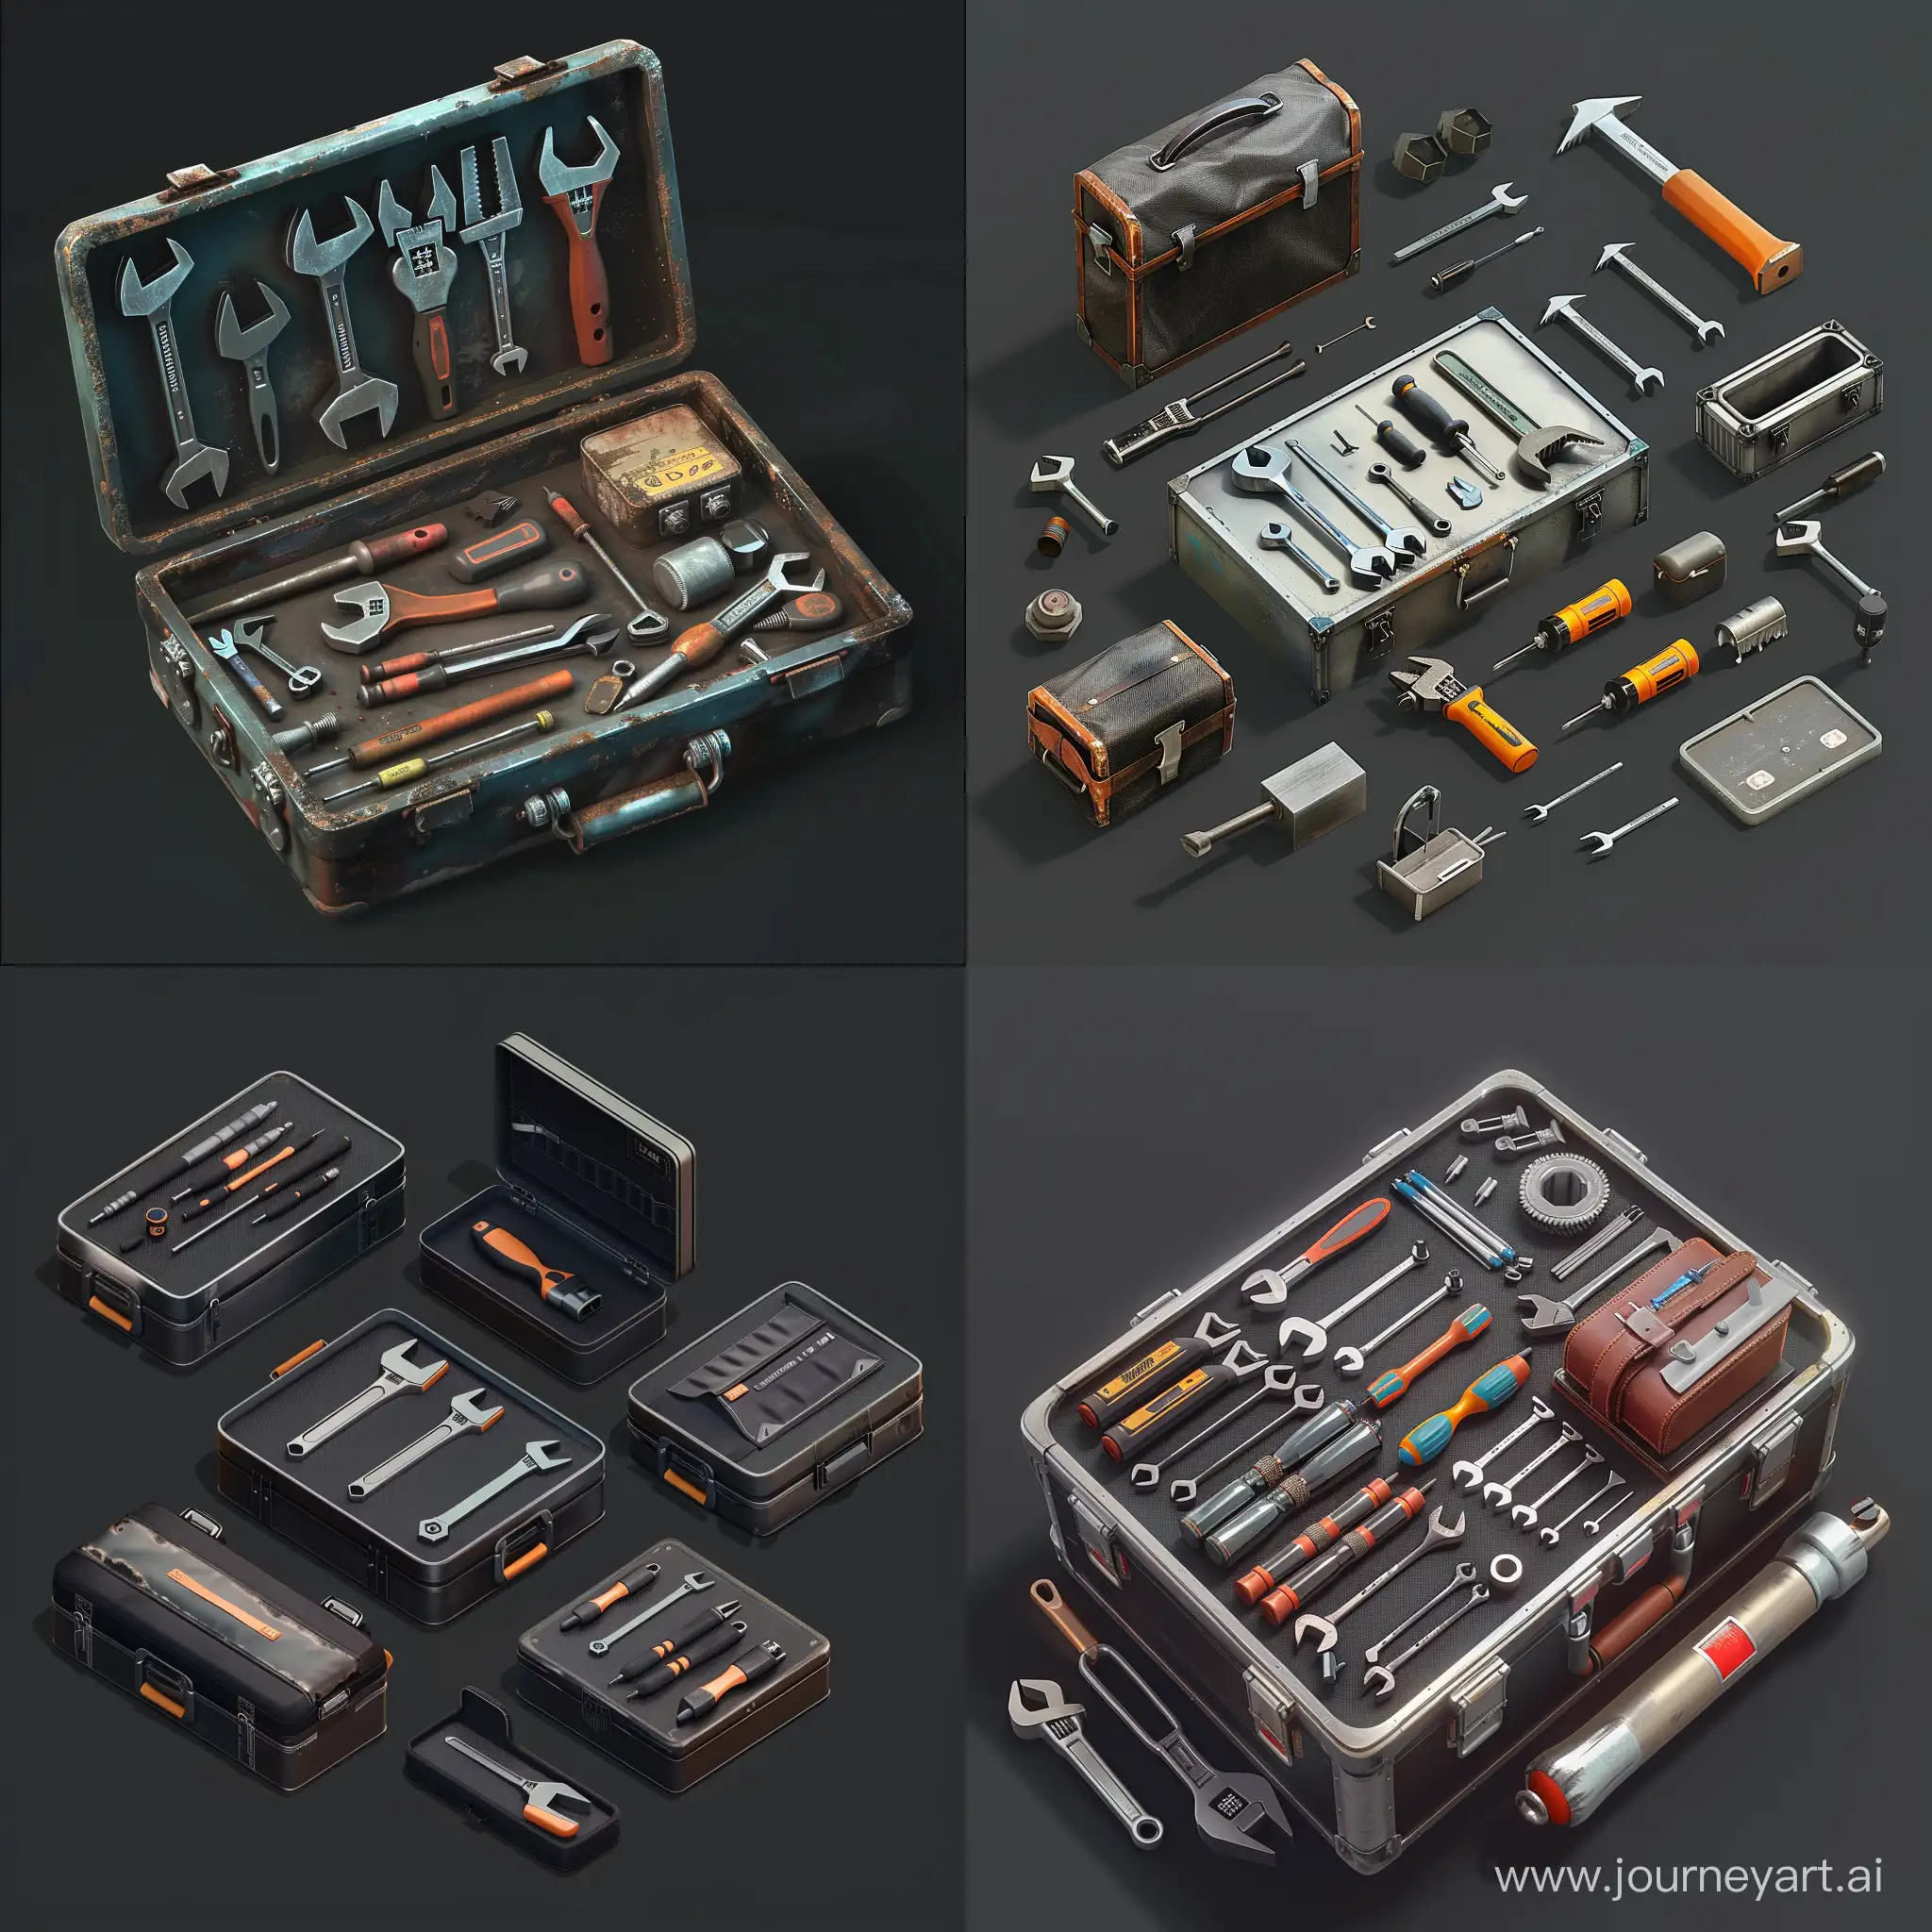 isometric set, worn, very realistic, repair tool kit instruments kit stored in simple metal box, isometric set, 3d rendered, less details, no handles